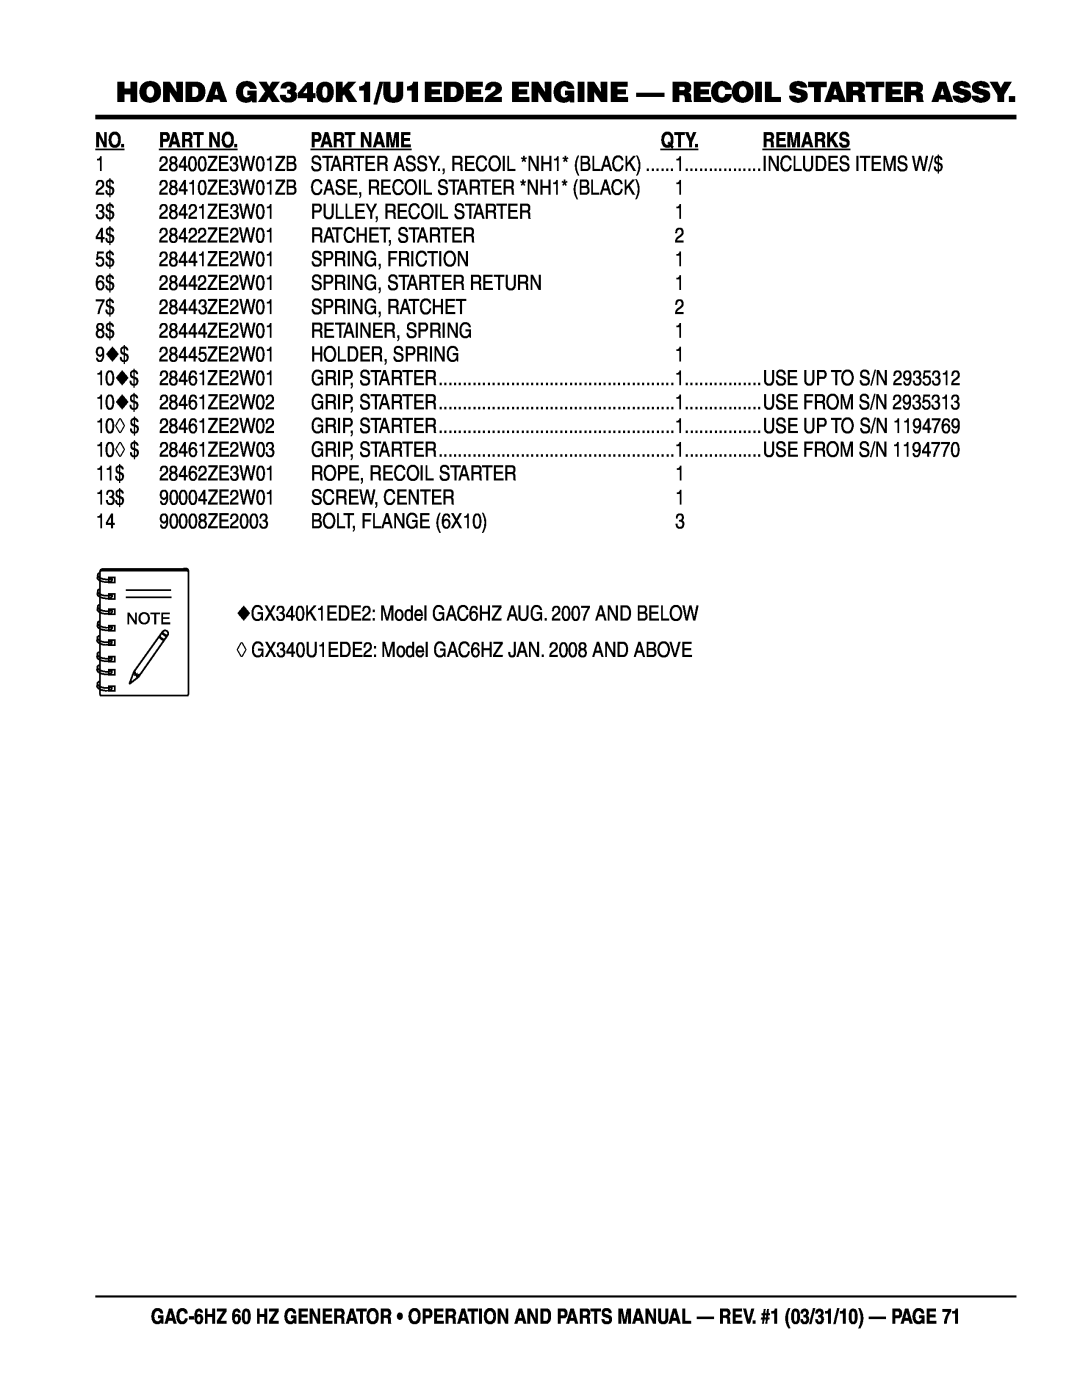 Multiquip GAC6HZ manual HONDA GX340K1/U1EDE2 ENGINE - RECOIL STARTER ASSY, Part Name, Remarks, 28400ZE3W01ZB, 28410ZE3W01ZB 